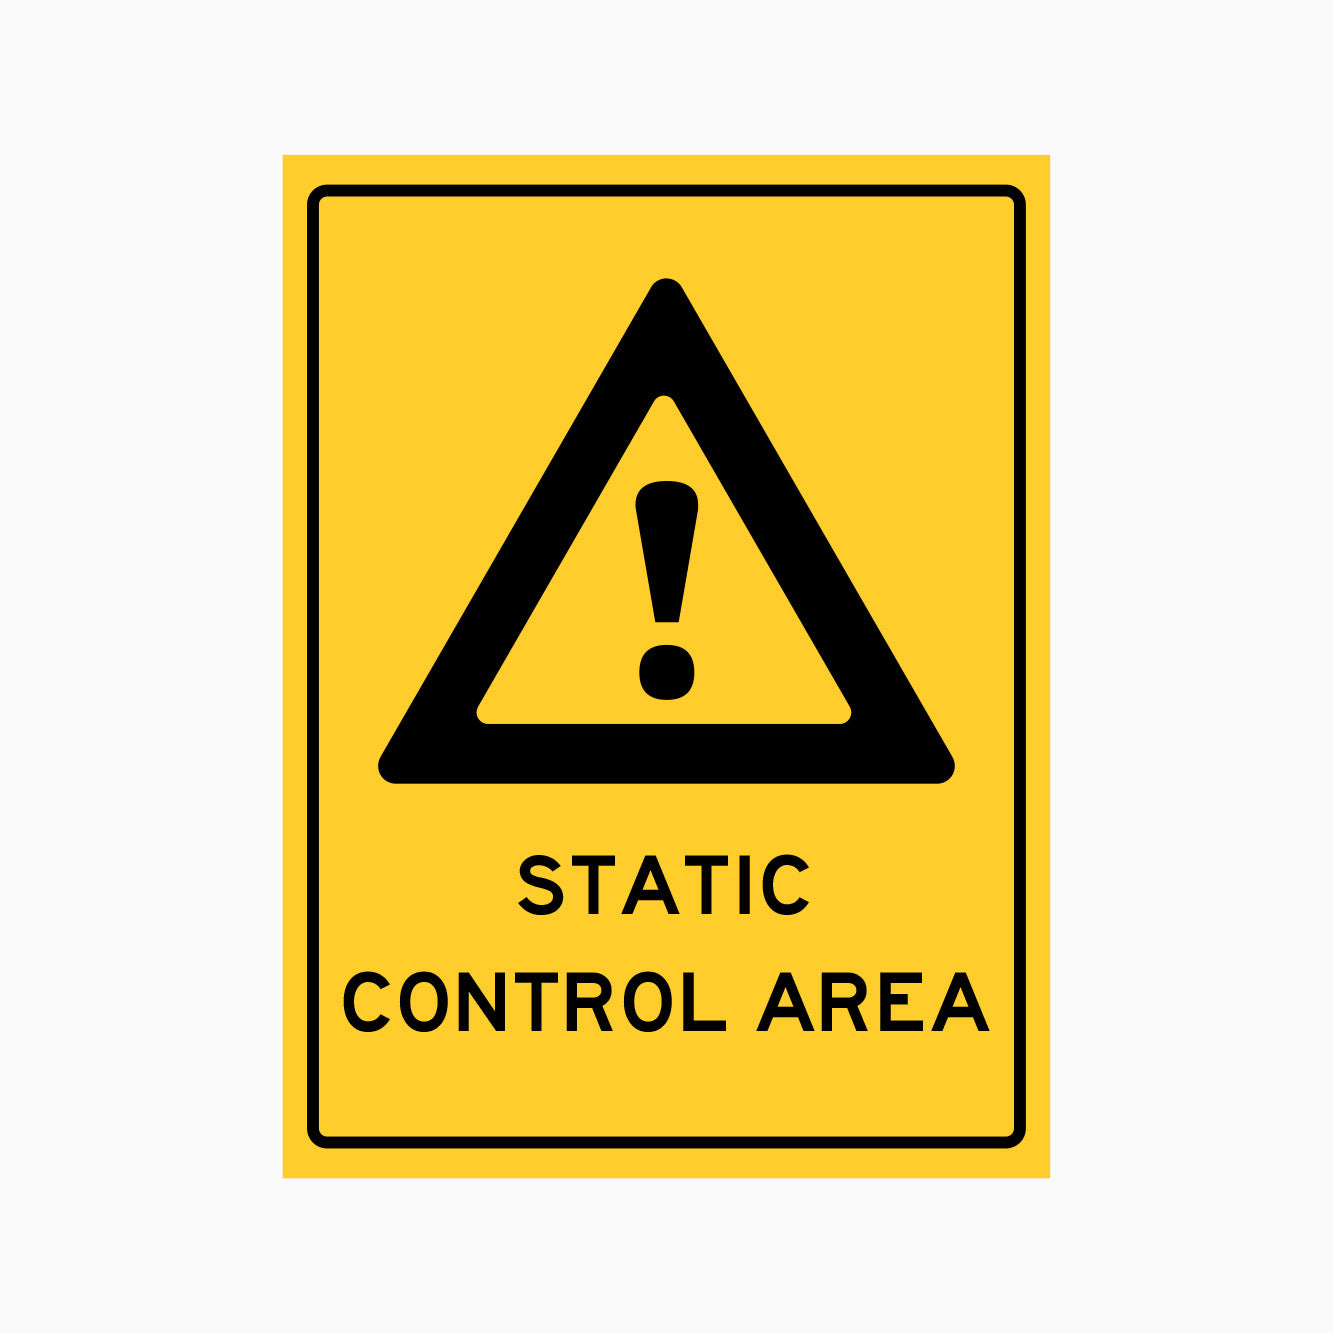 STATIC CONTROL AREA SIGN